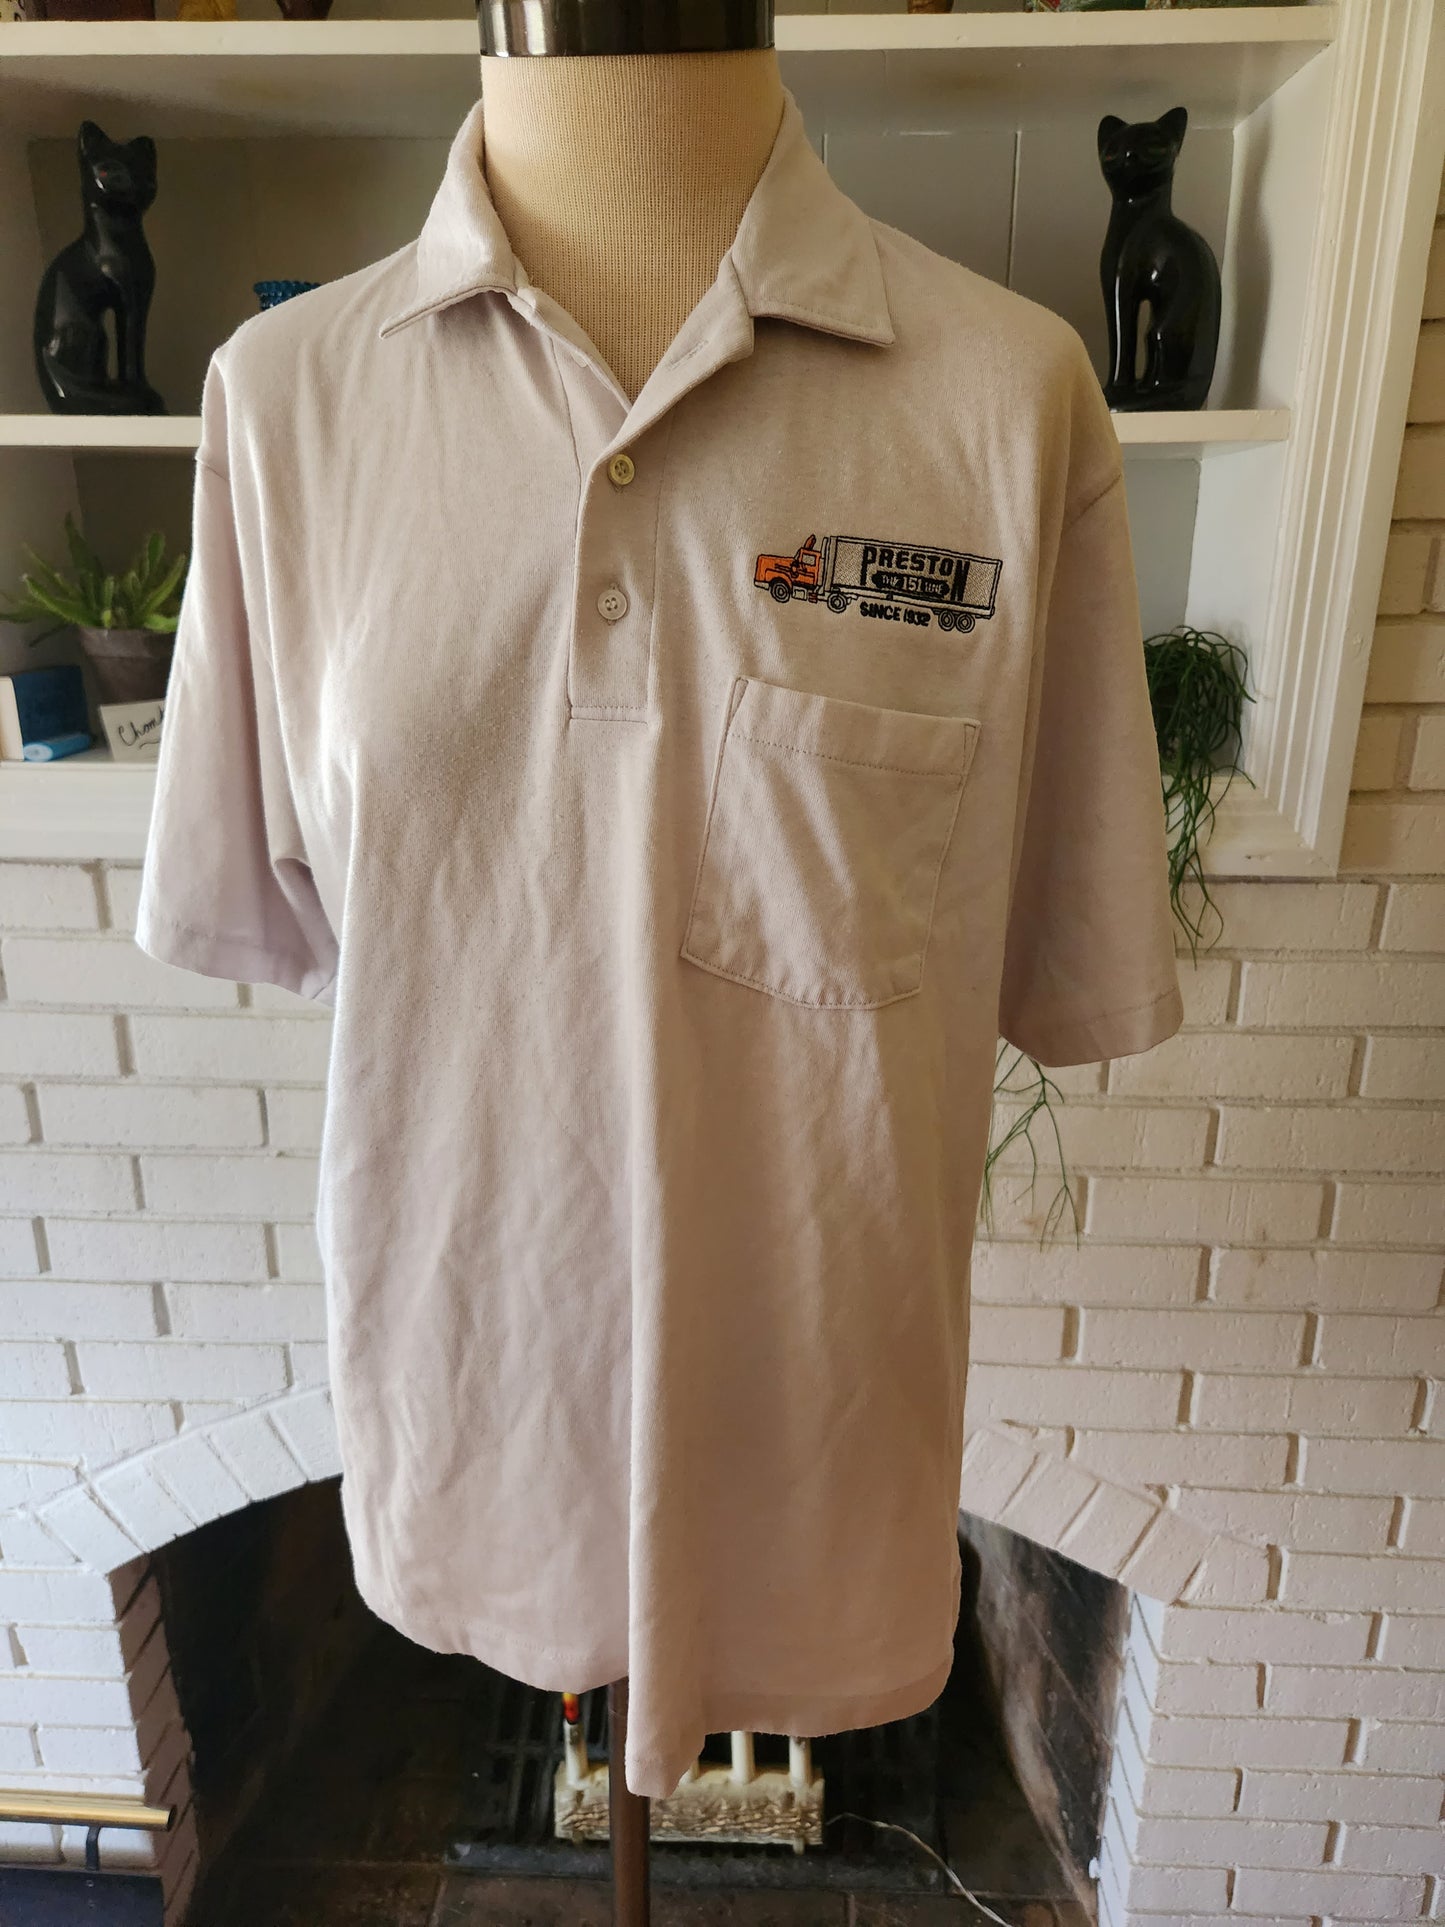 Vintage Short Sleeve Preston Trucking Polo Shirt by Red Kap